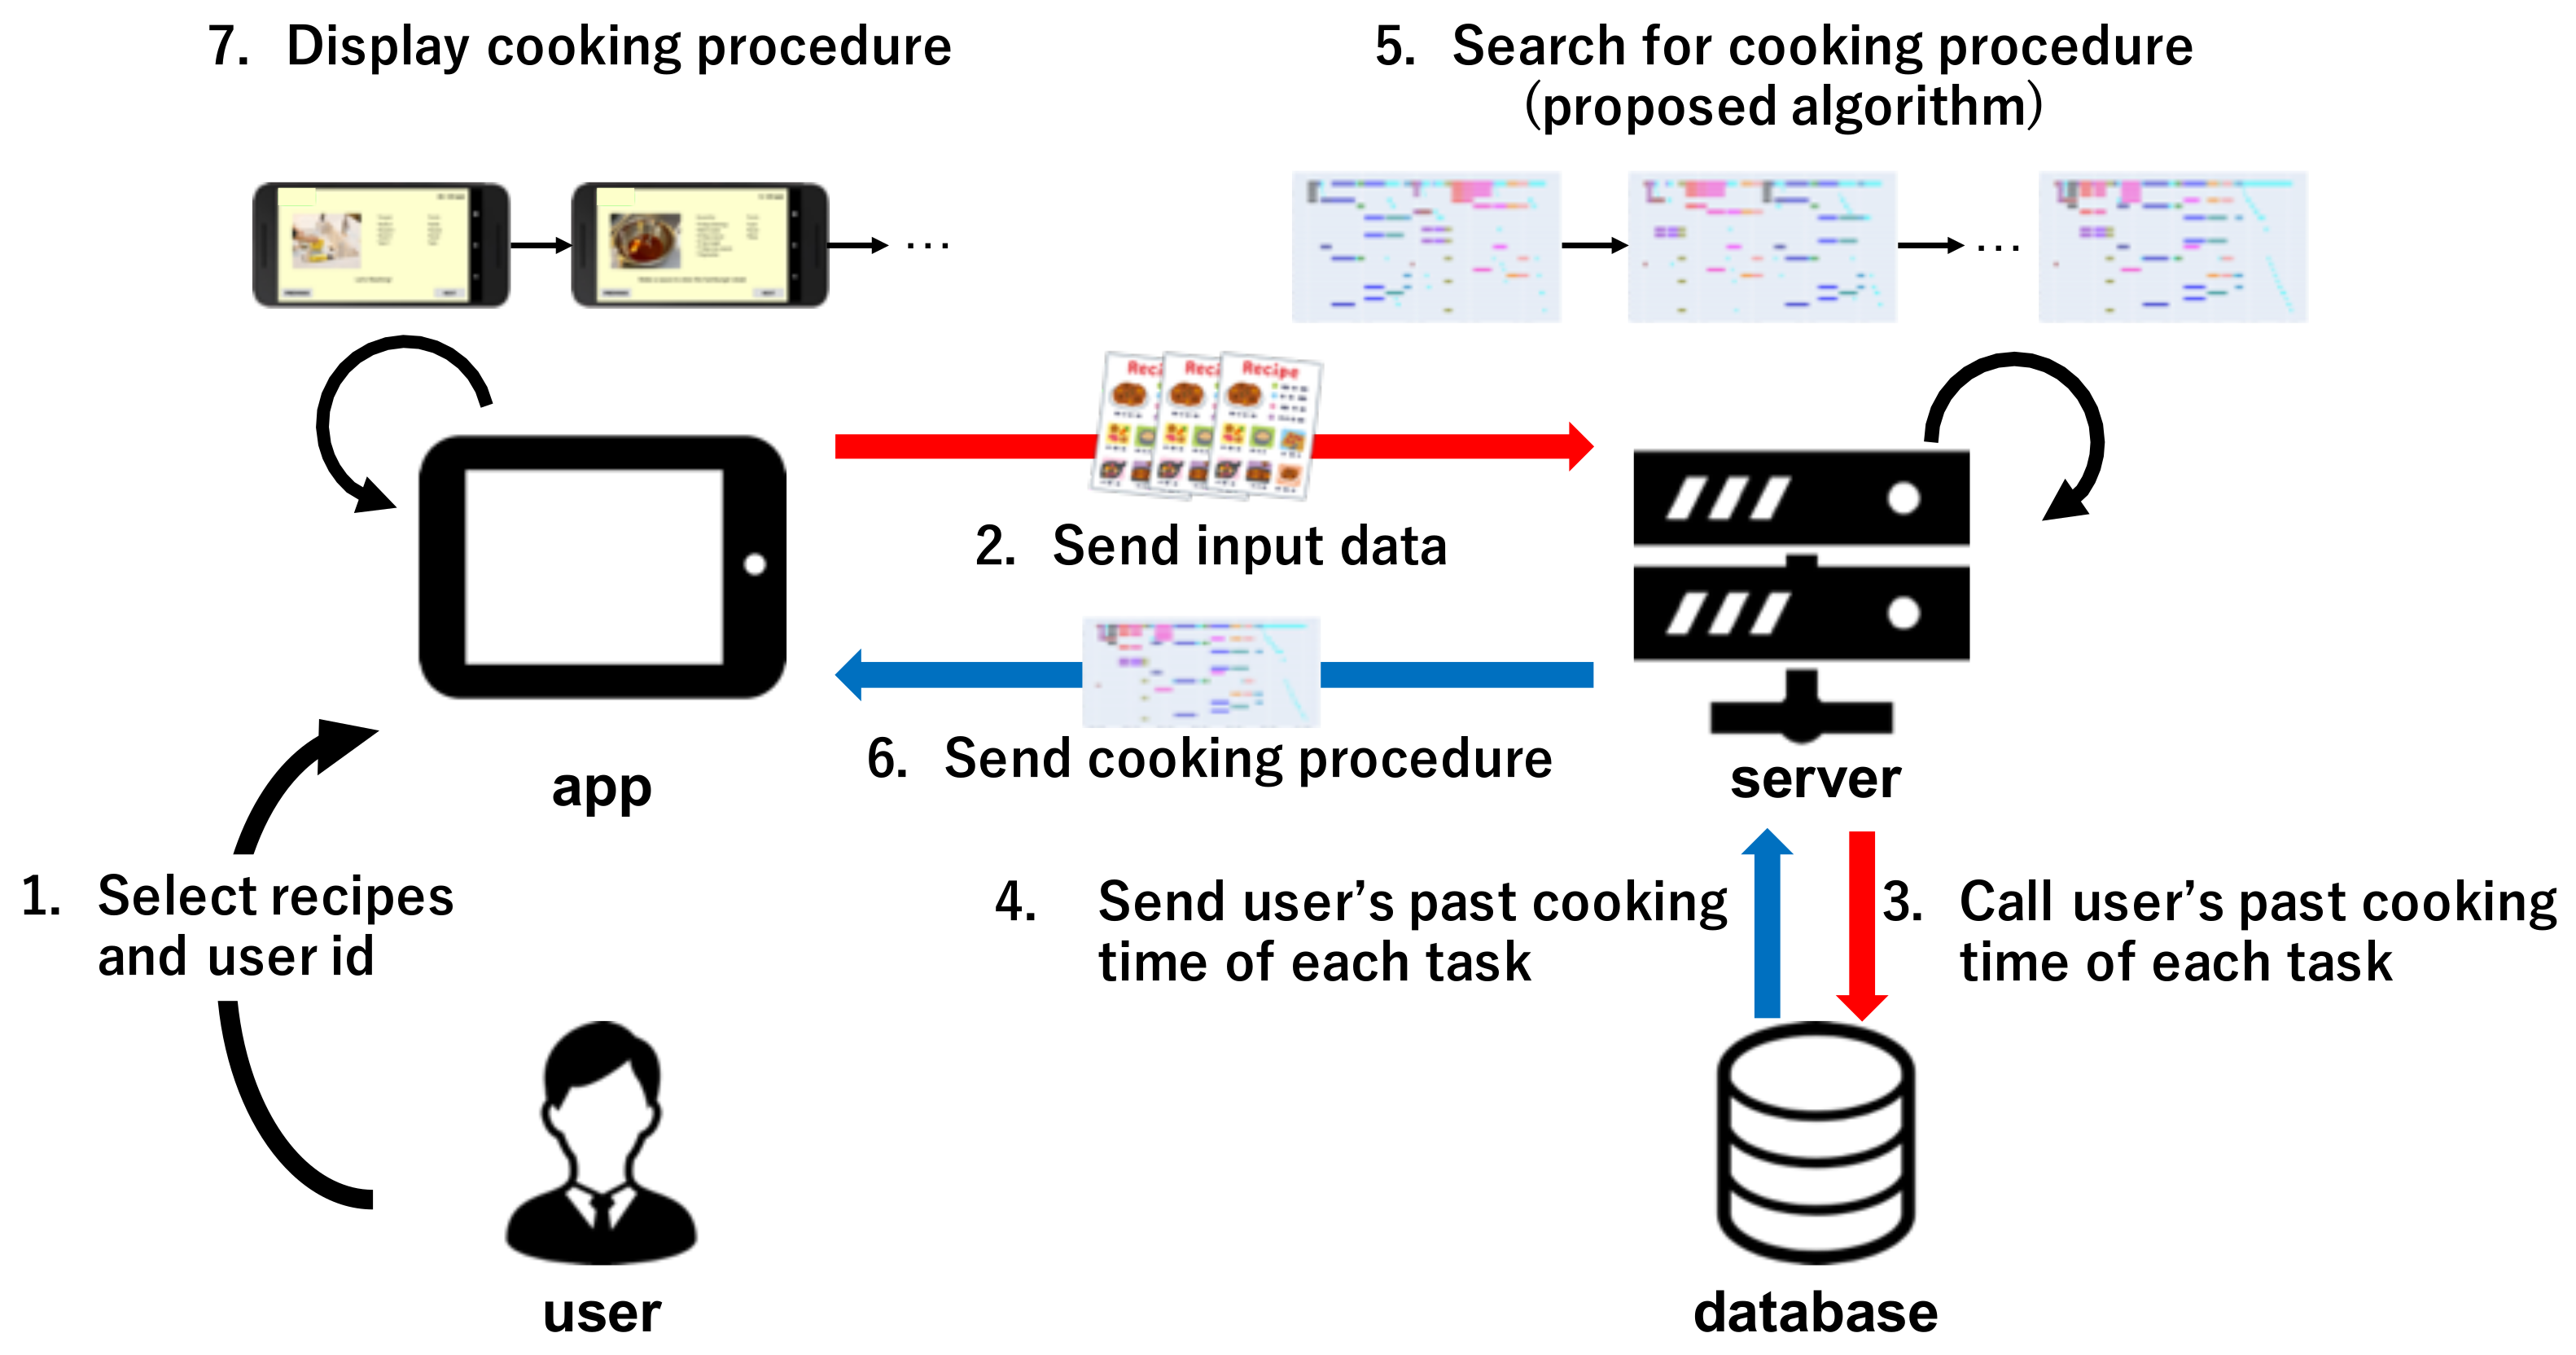 Recipe analysis algorithm for a cooking robot. The algorithm